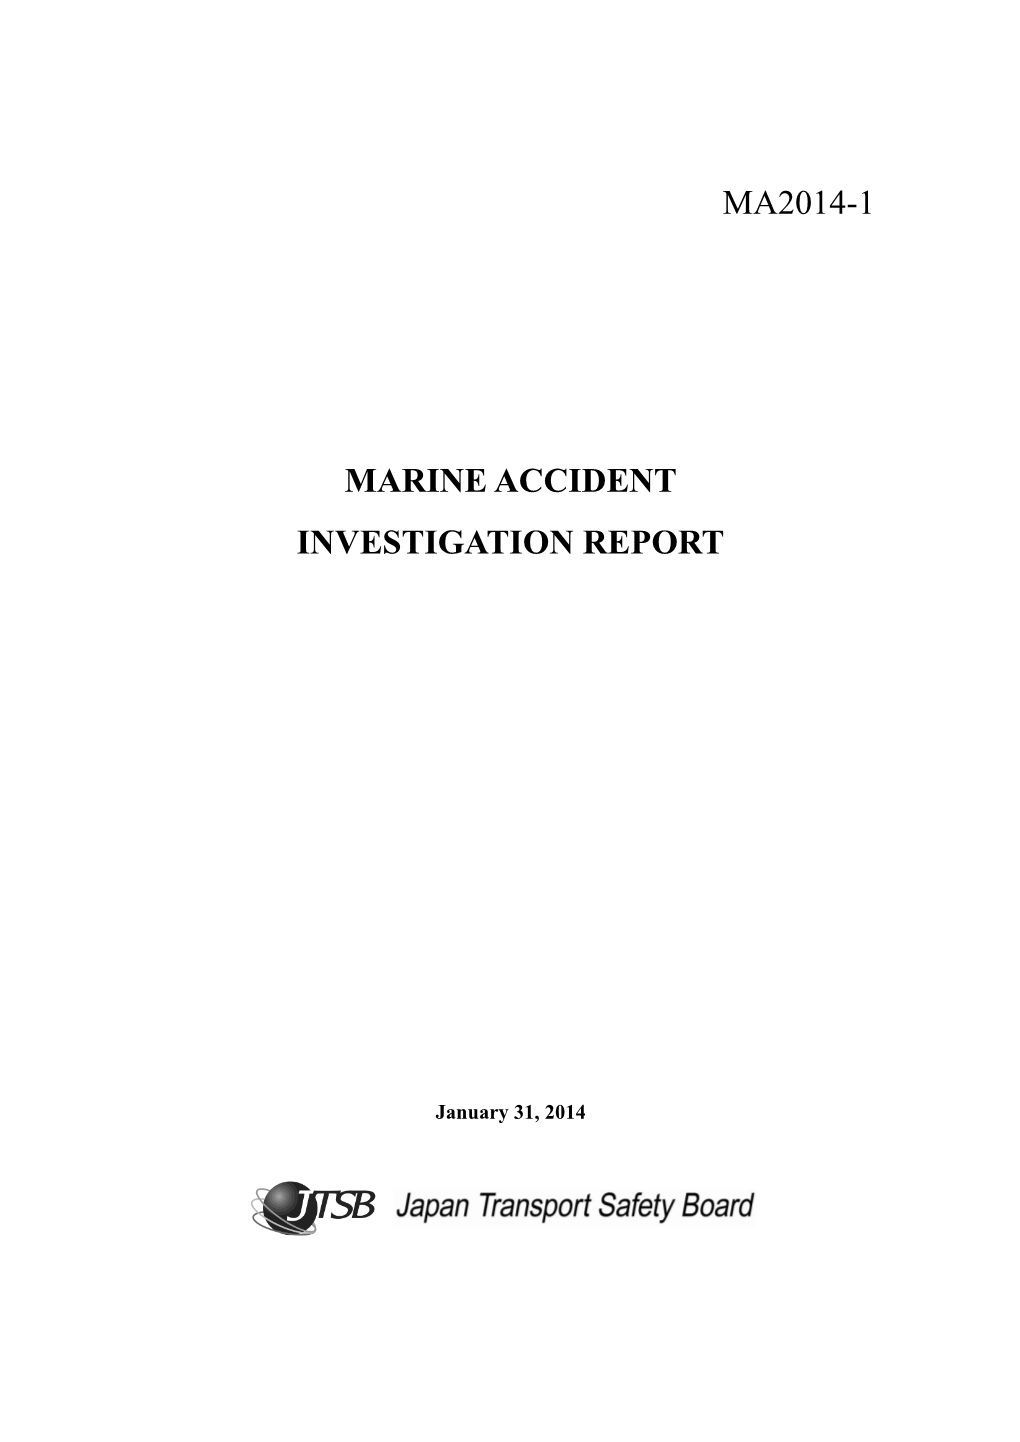 Ma2014-1 Marine Accident Investigation Report